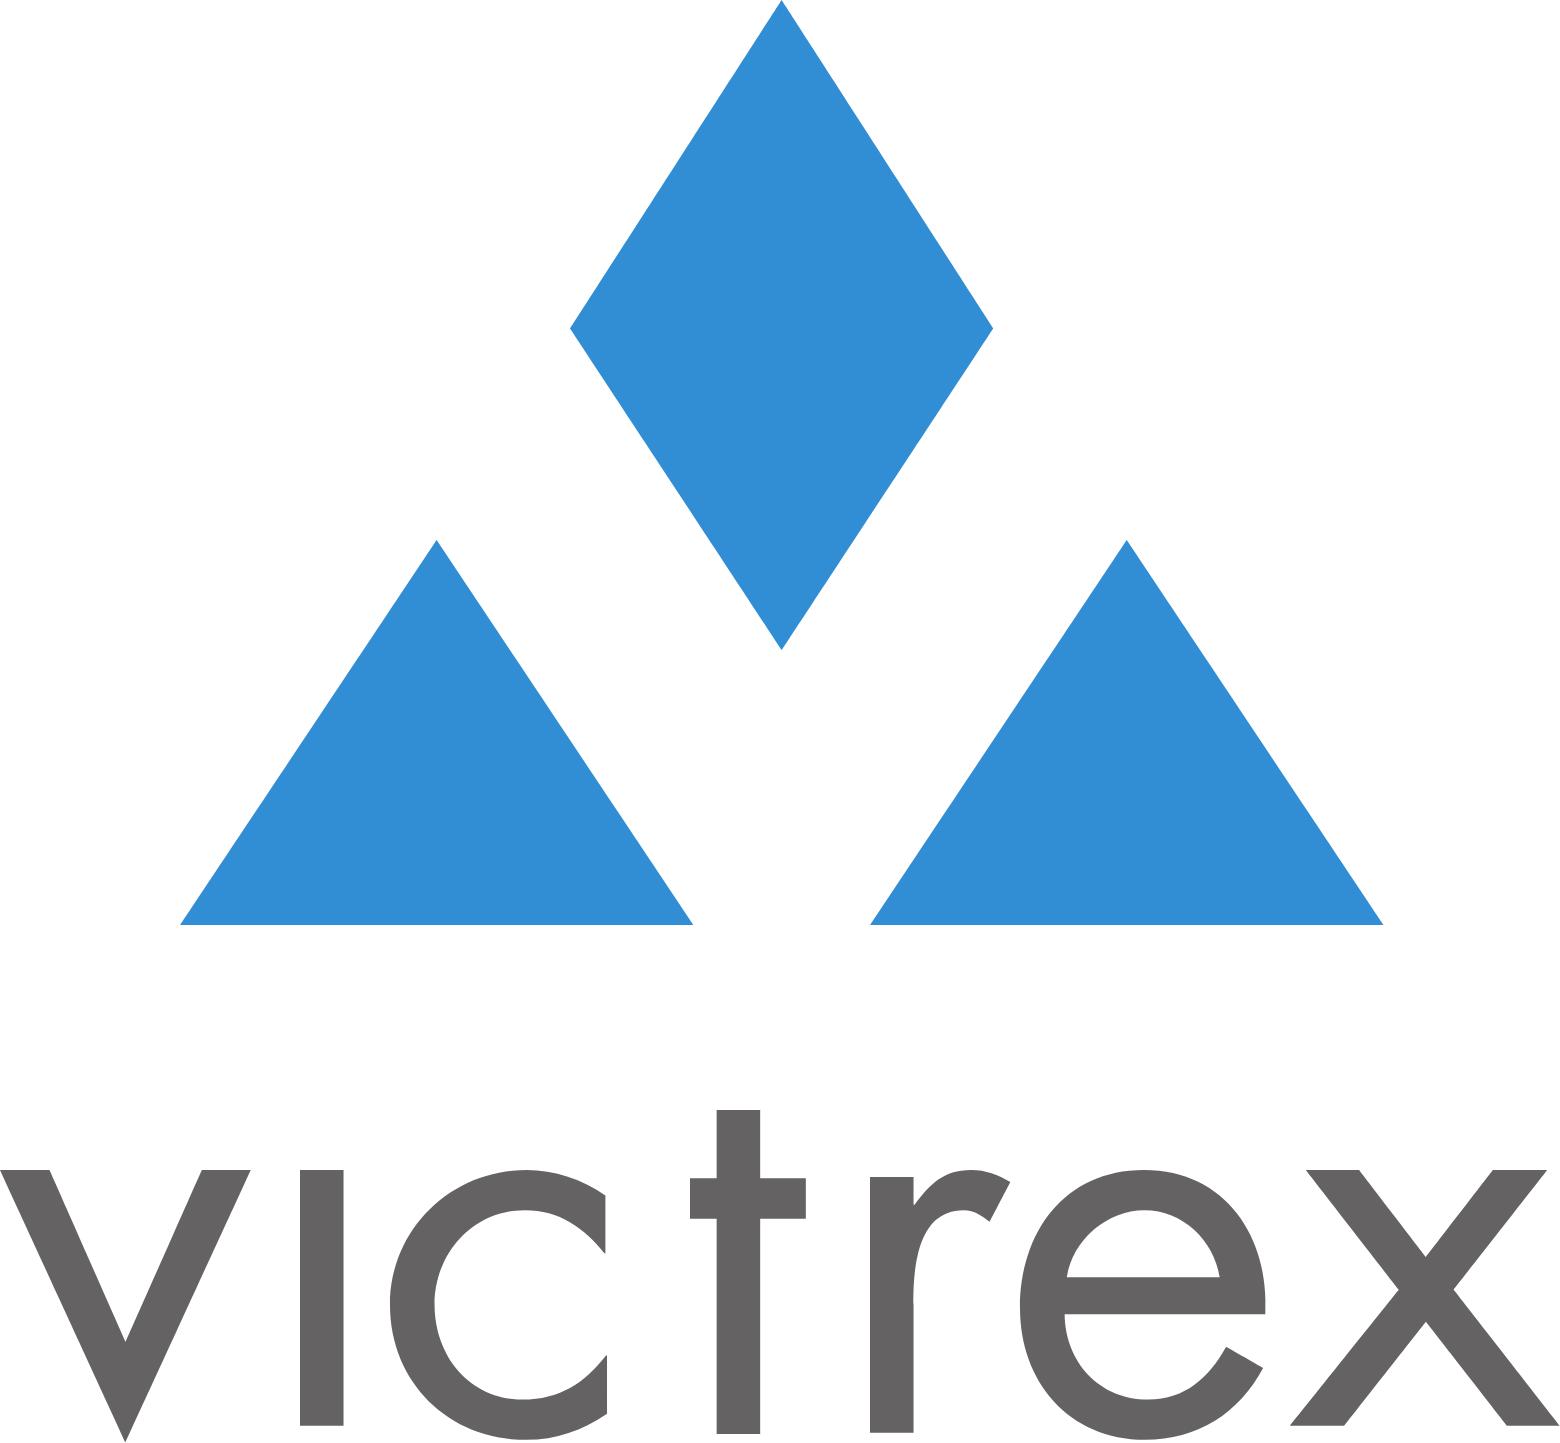 Victrex logo large (transparent PNG)